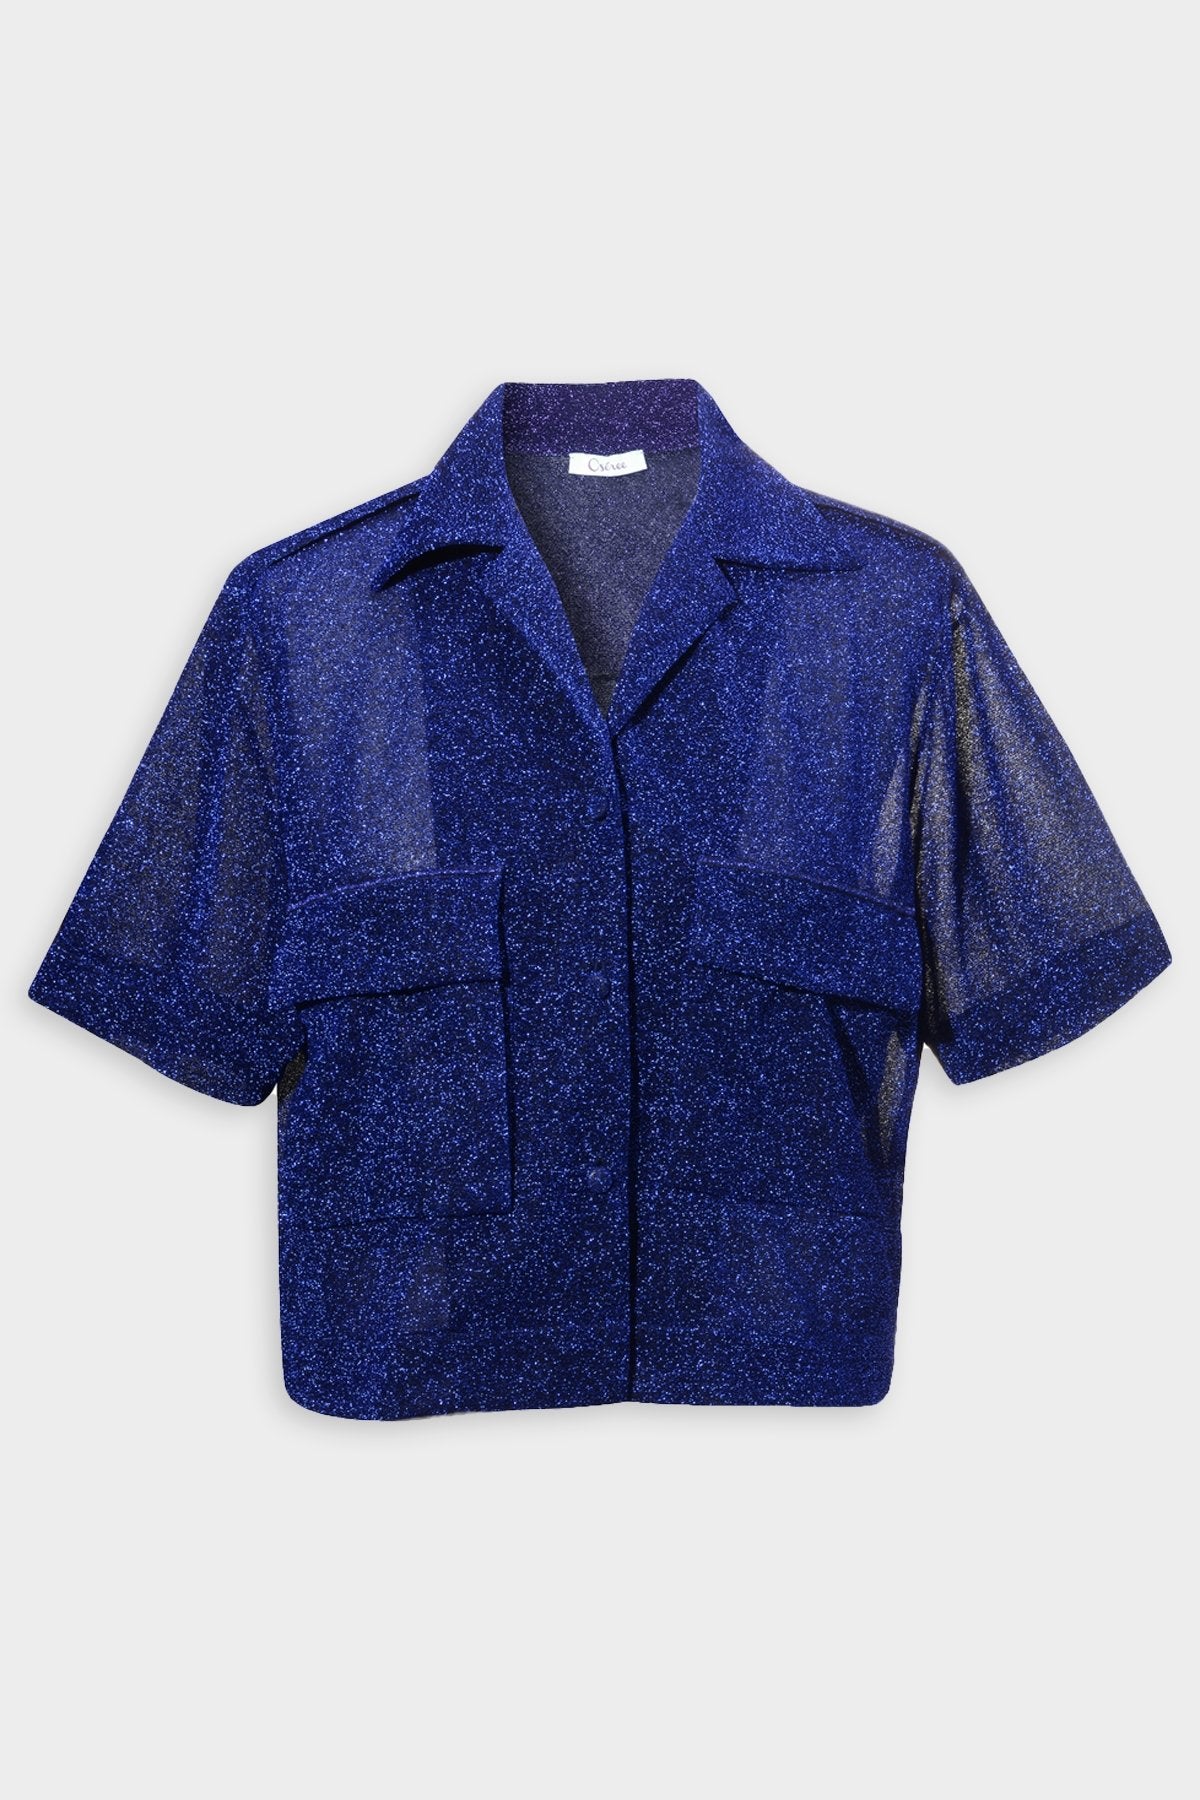 Lumiere Bowling Shirt Pockets in Blue - shop-olivia.com